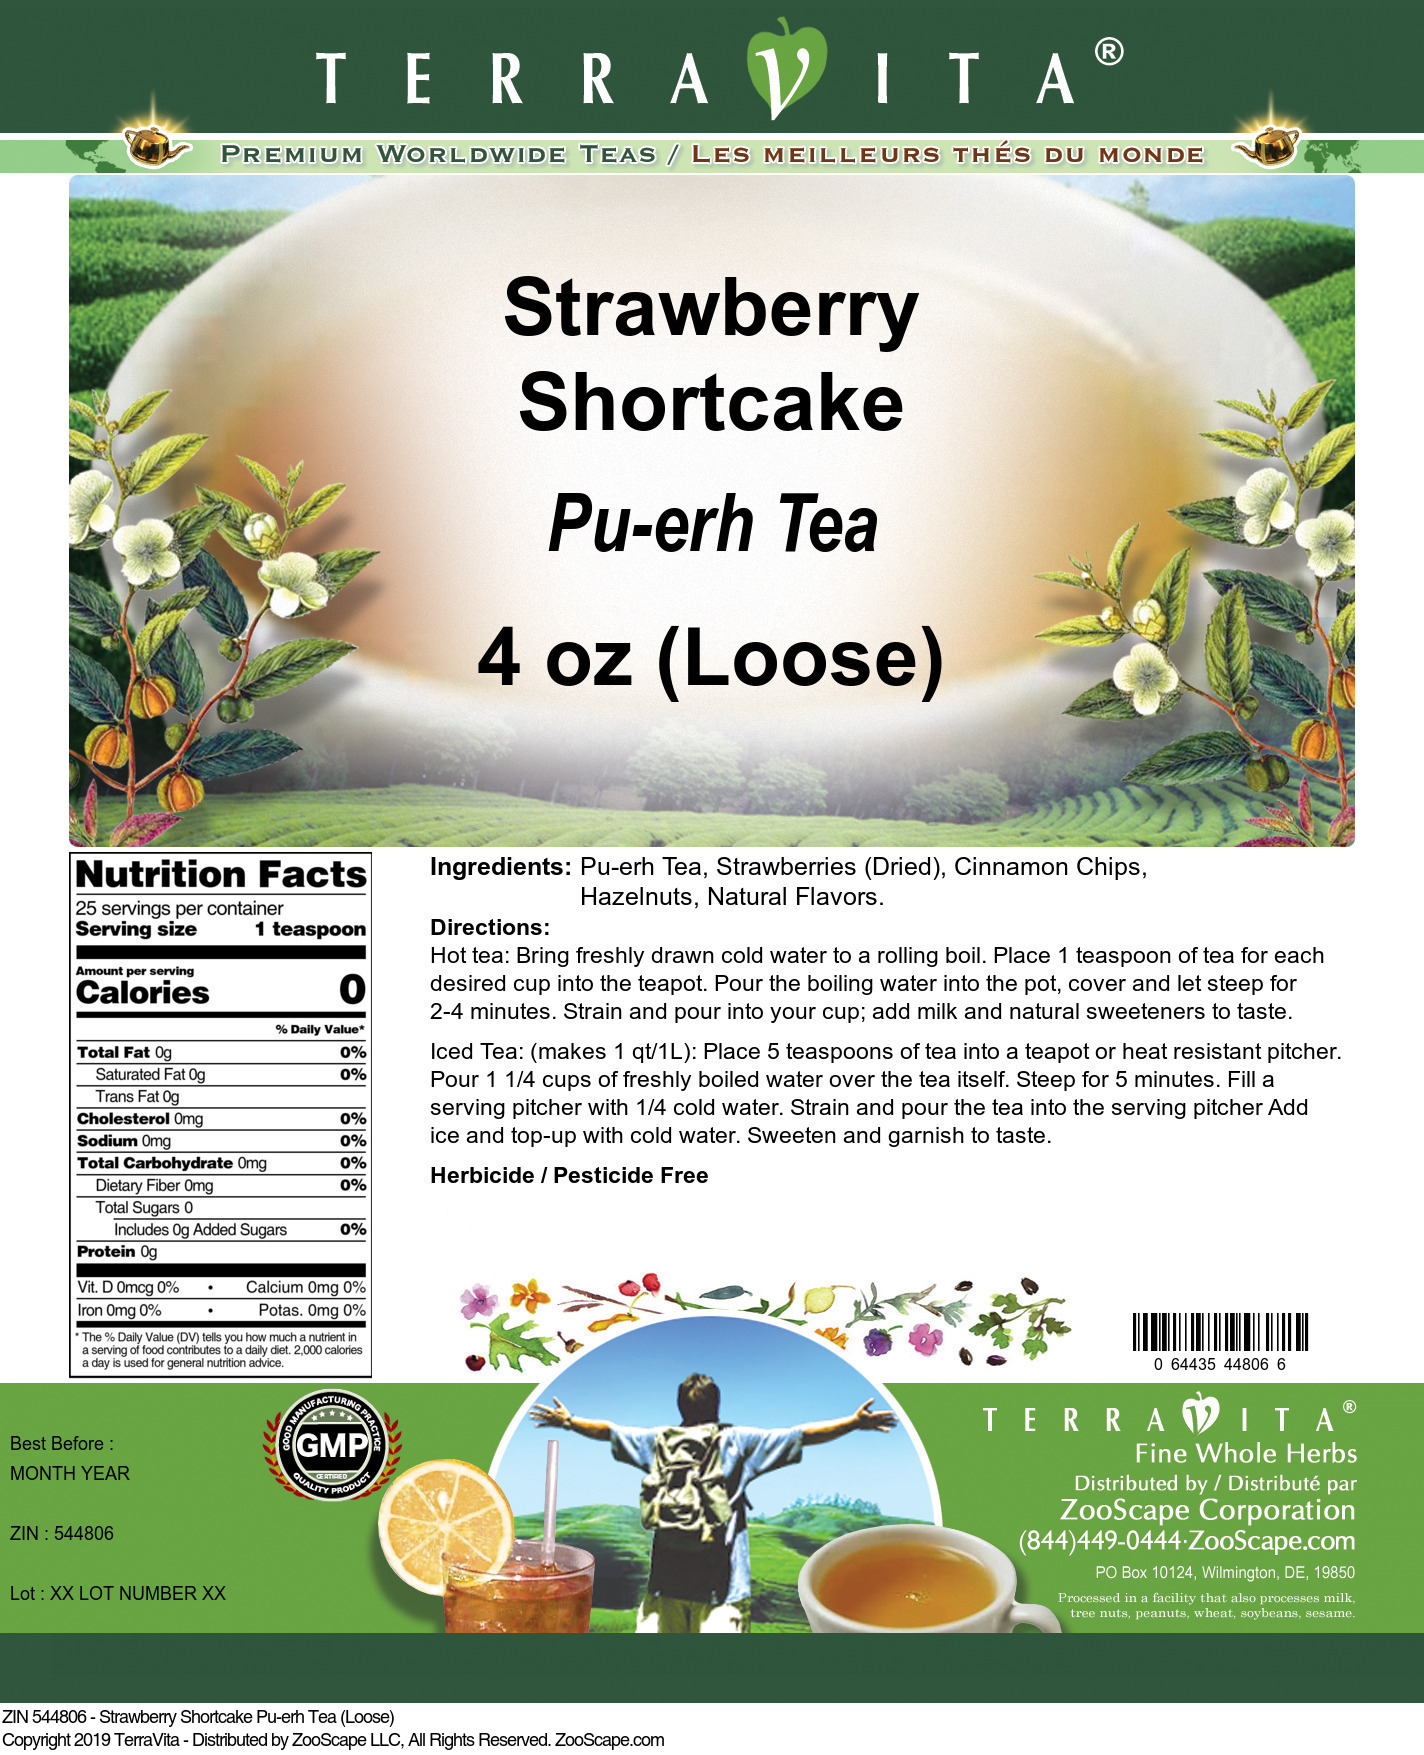 Strawberry Shortcake Pu-erh Tea (Loose) - Label